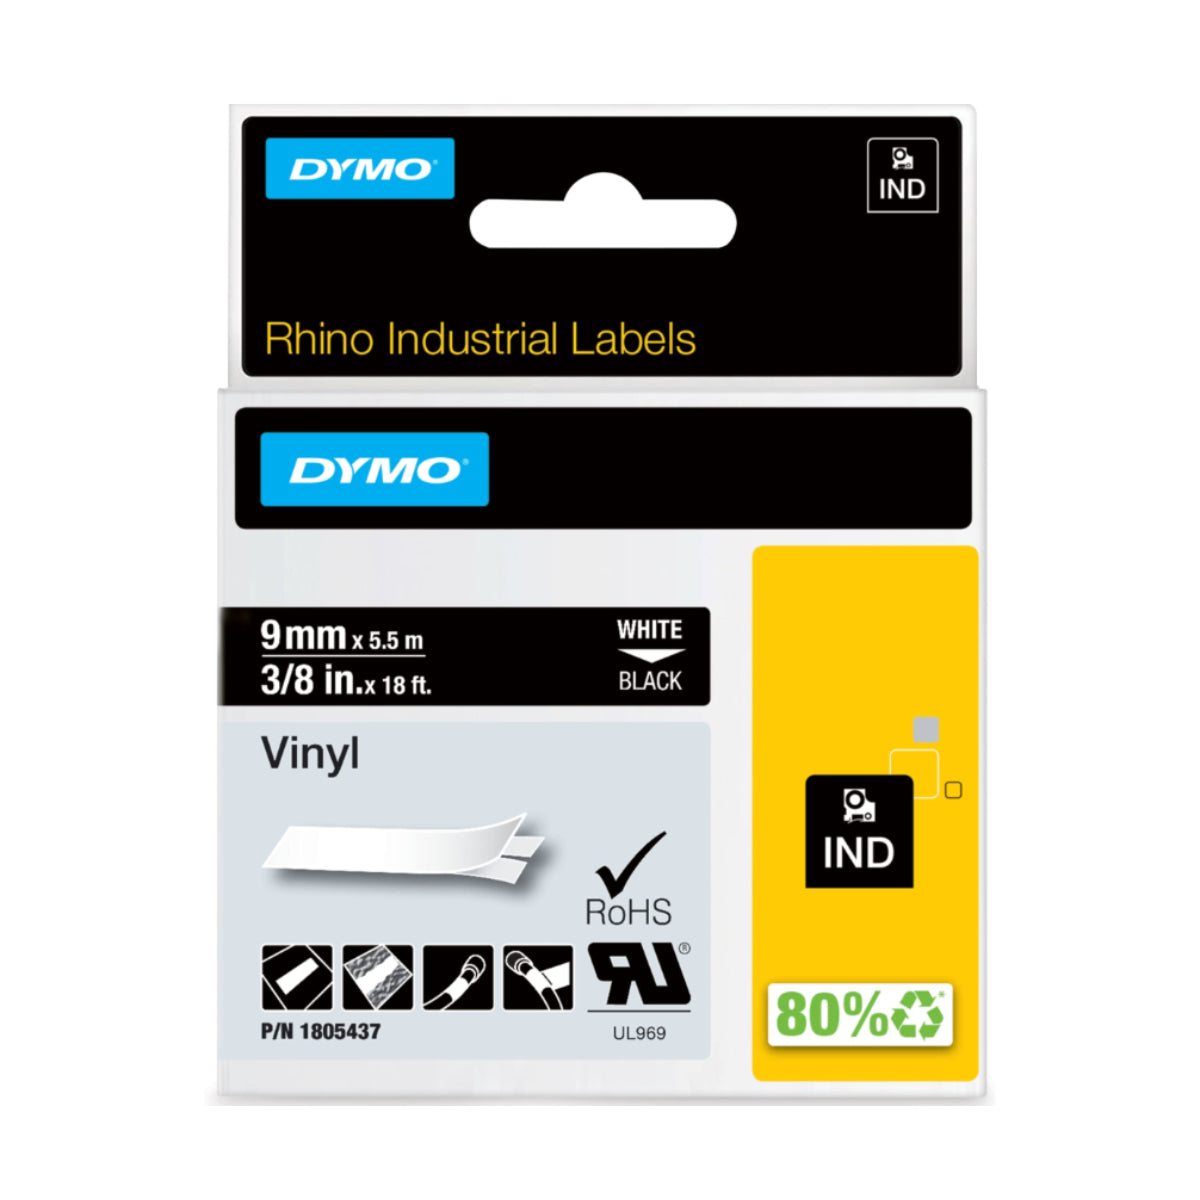 Dymo IND Rhino Labels, Vinyl 9 mm x 5.5 m, White on Black - 1805437